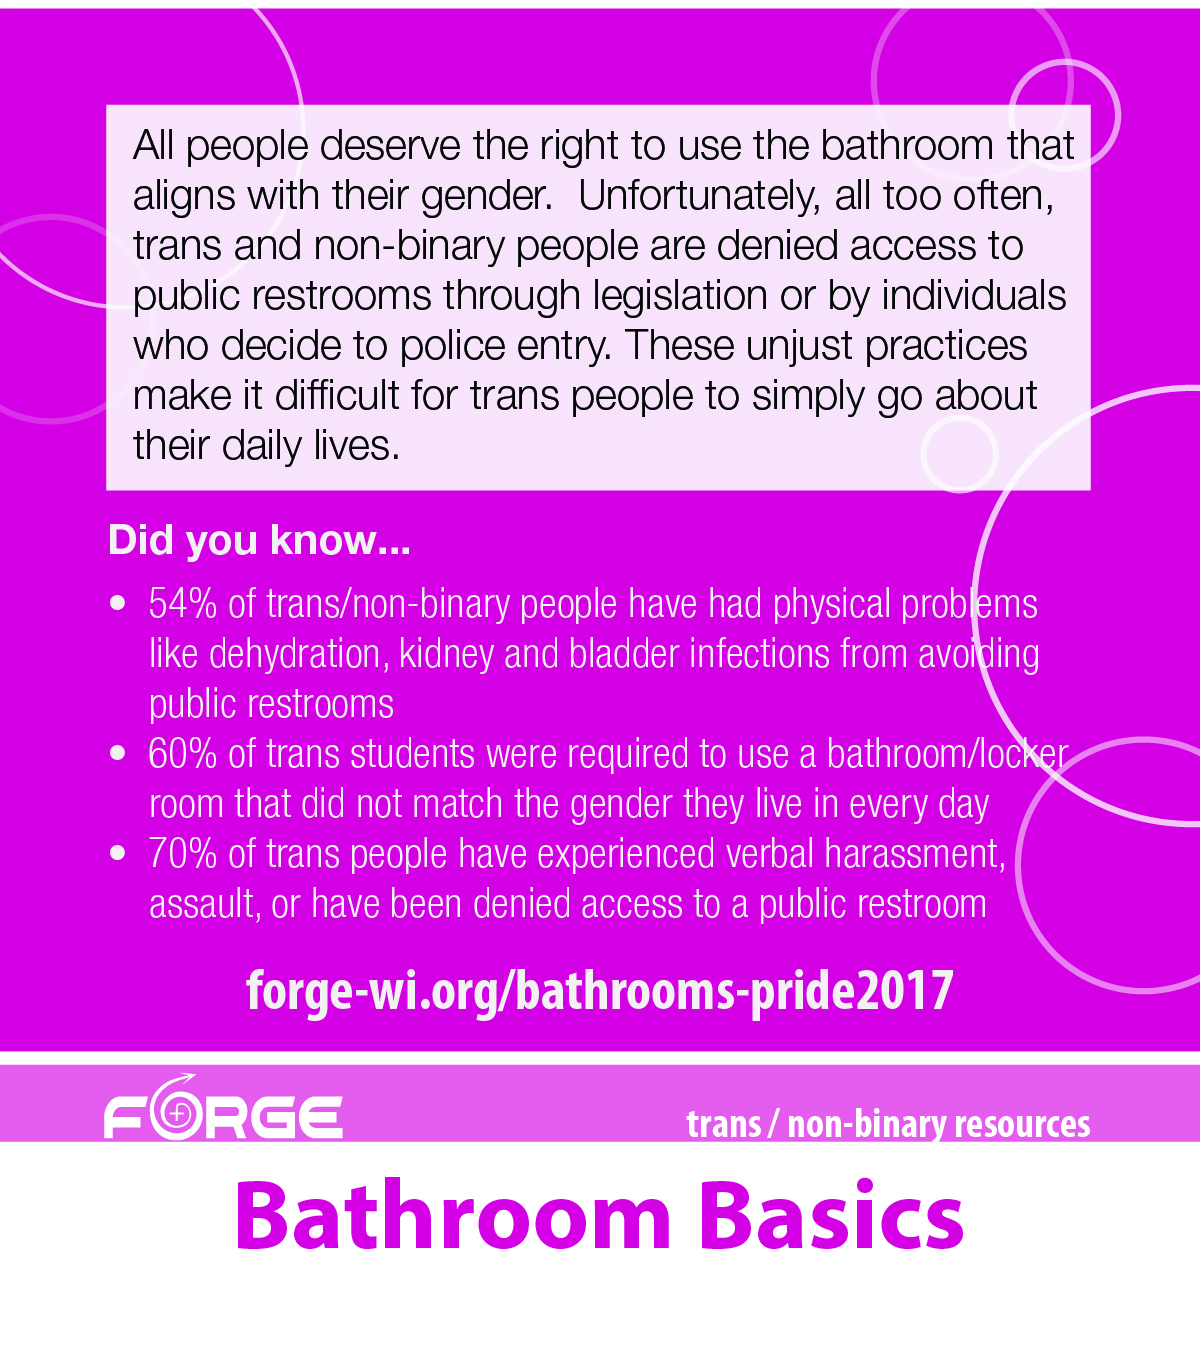 Bathroom Basics palm card front - Pride 2017